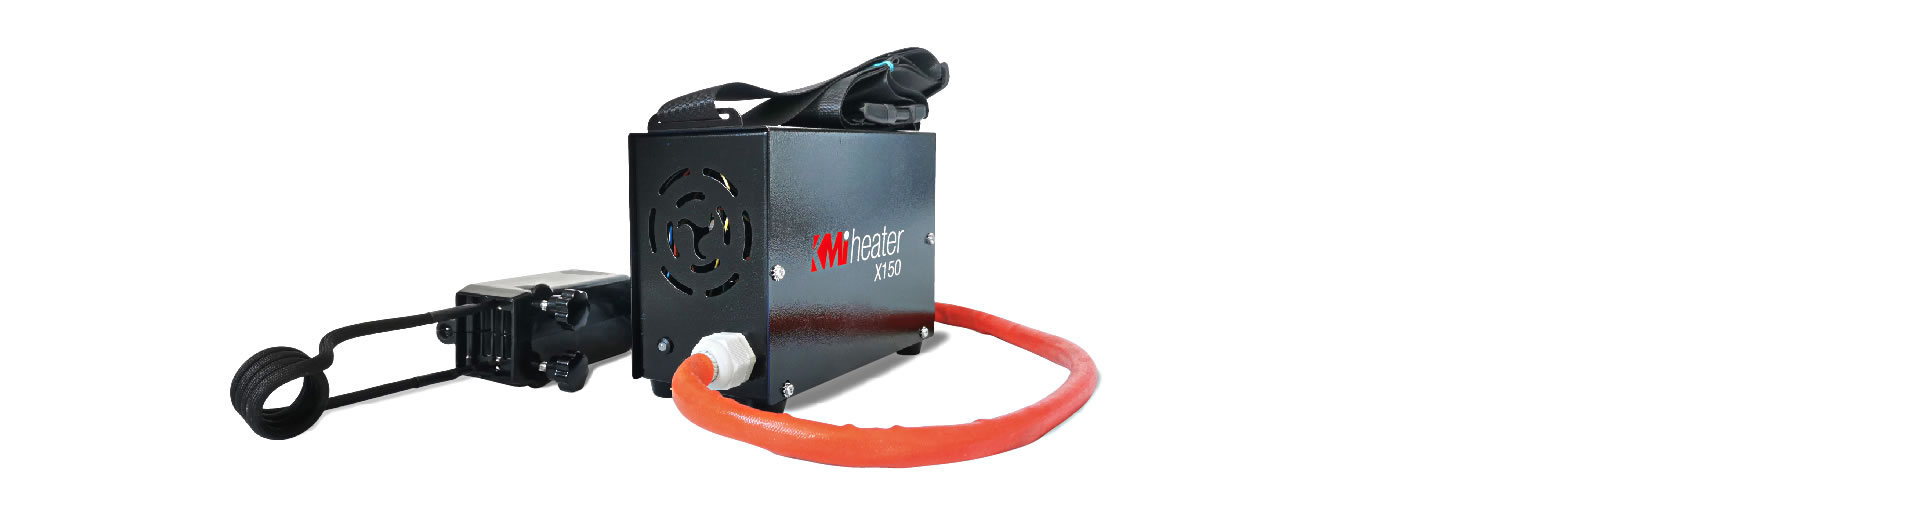 Induction Heater KMi Heater X150